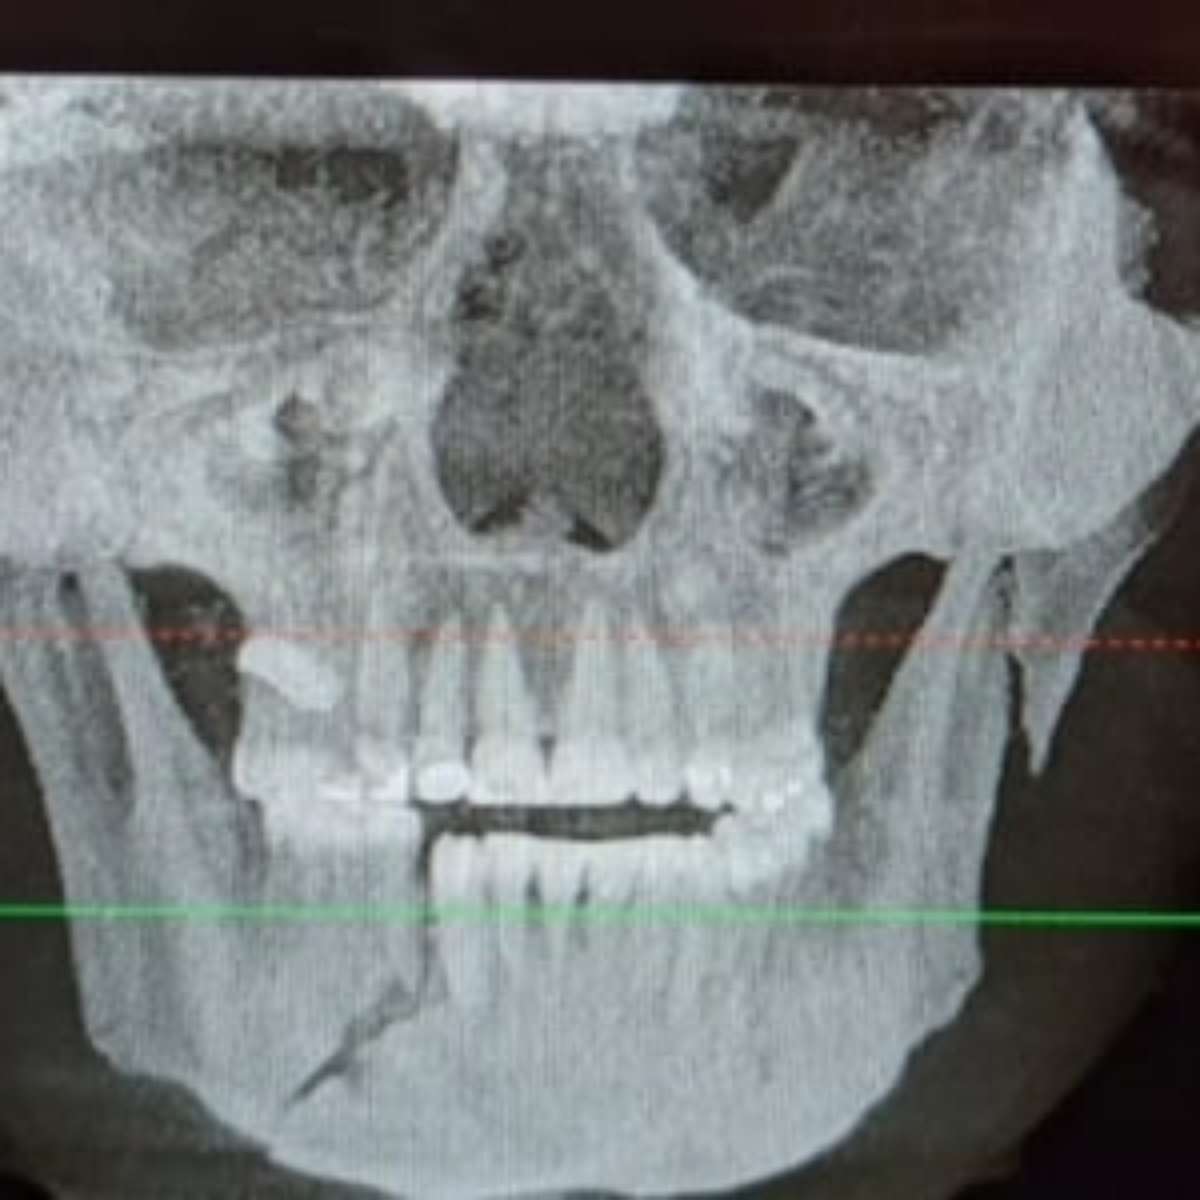 acidente maxilar e mandibula